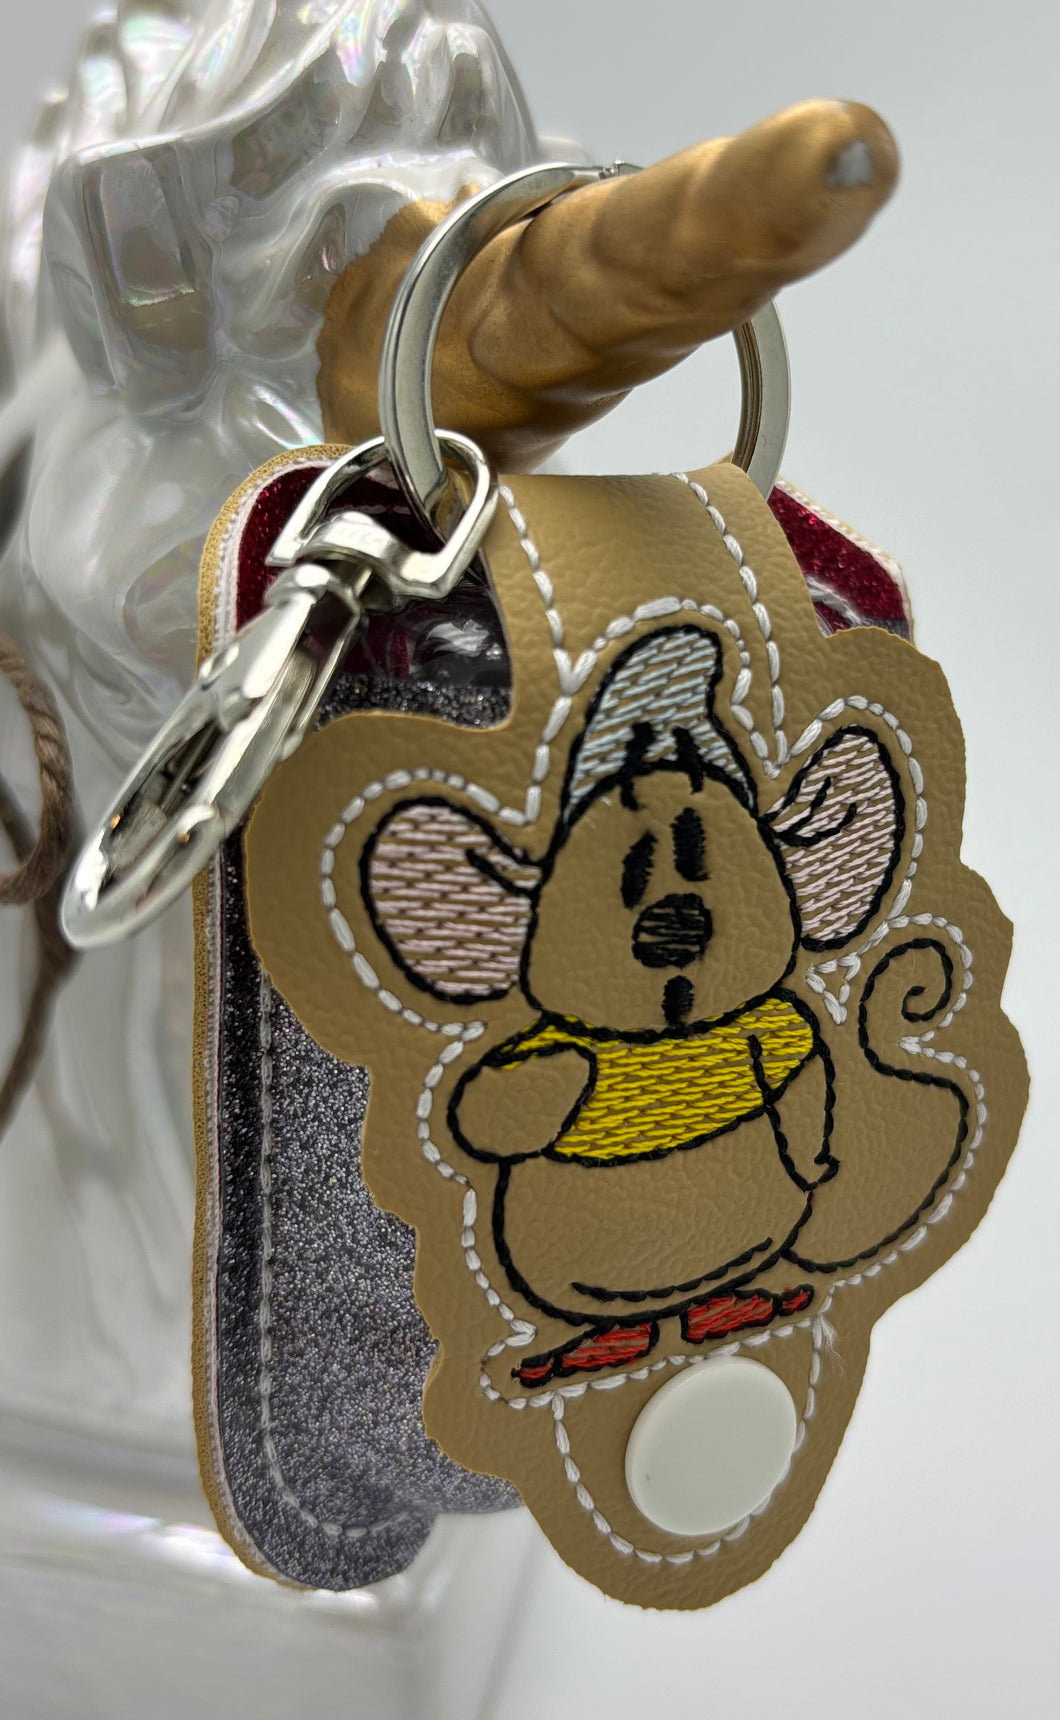 Gus Mouse 1 oz Sanitizer Holder Keychain